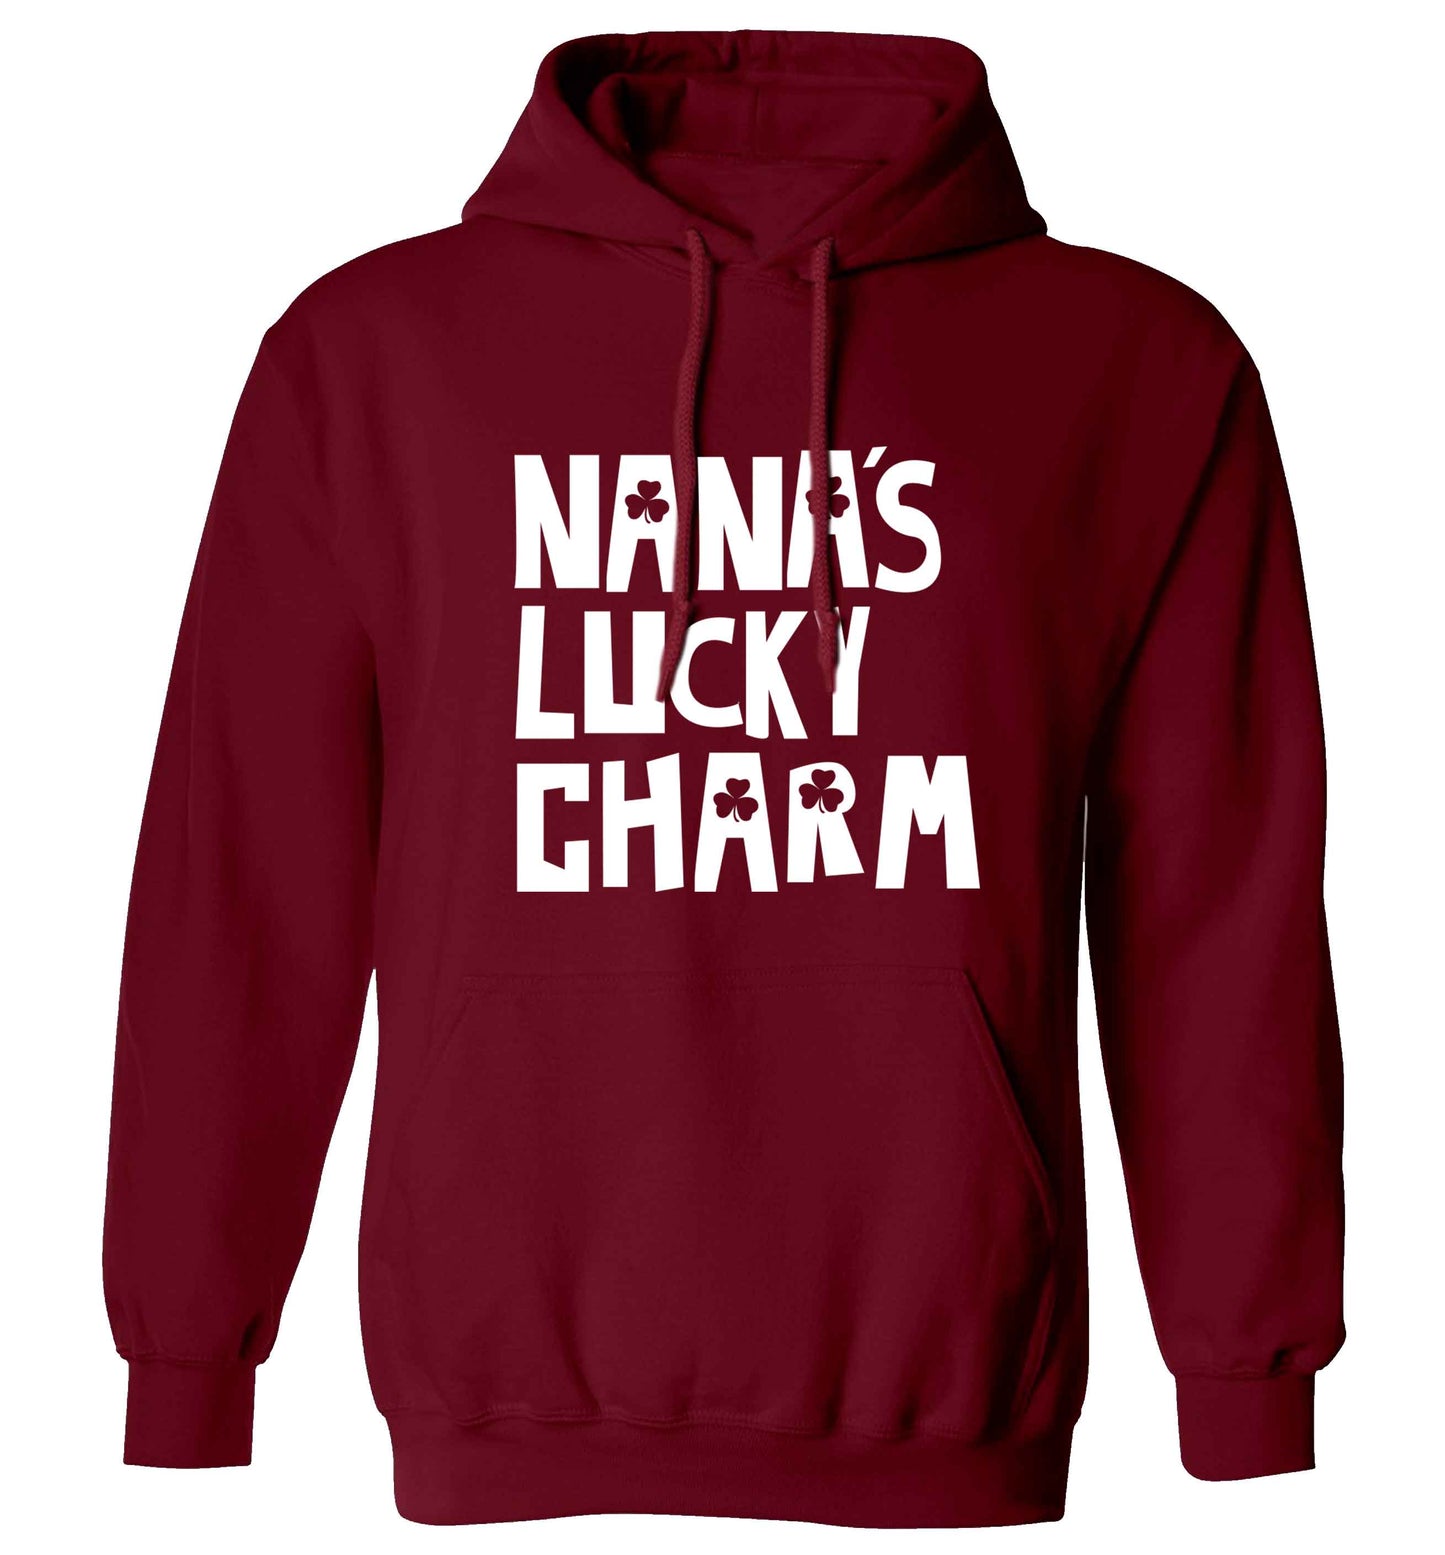 Nana's lucky charm adults unisex maroon hoodie 2XL